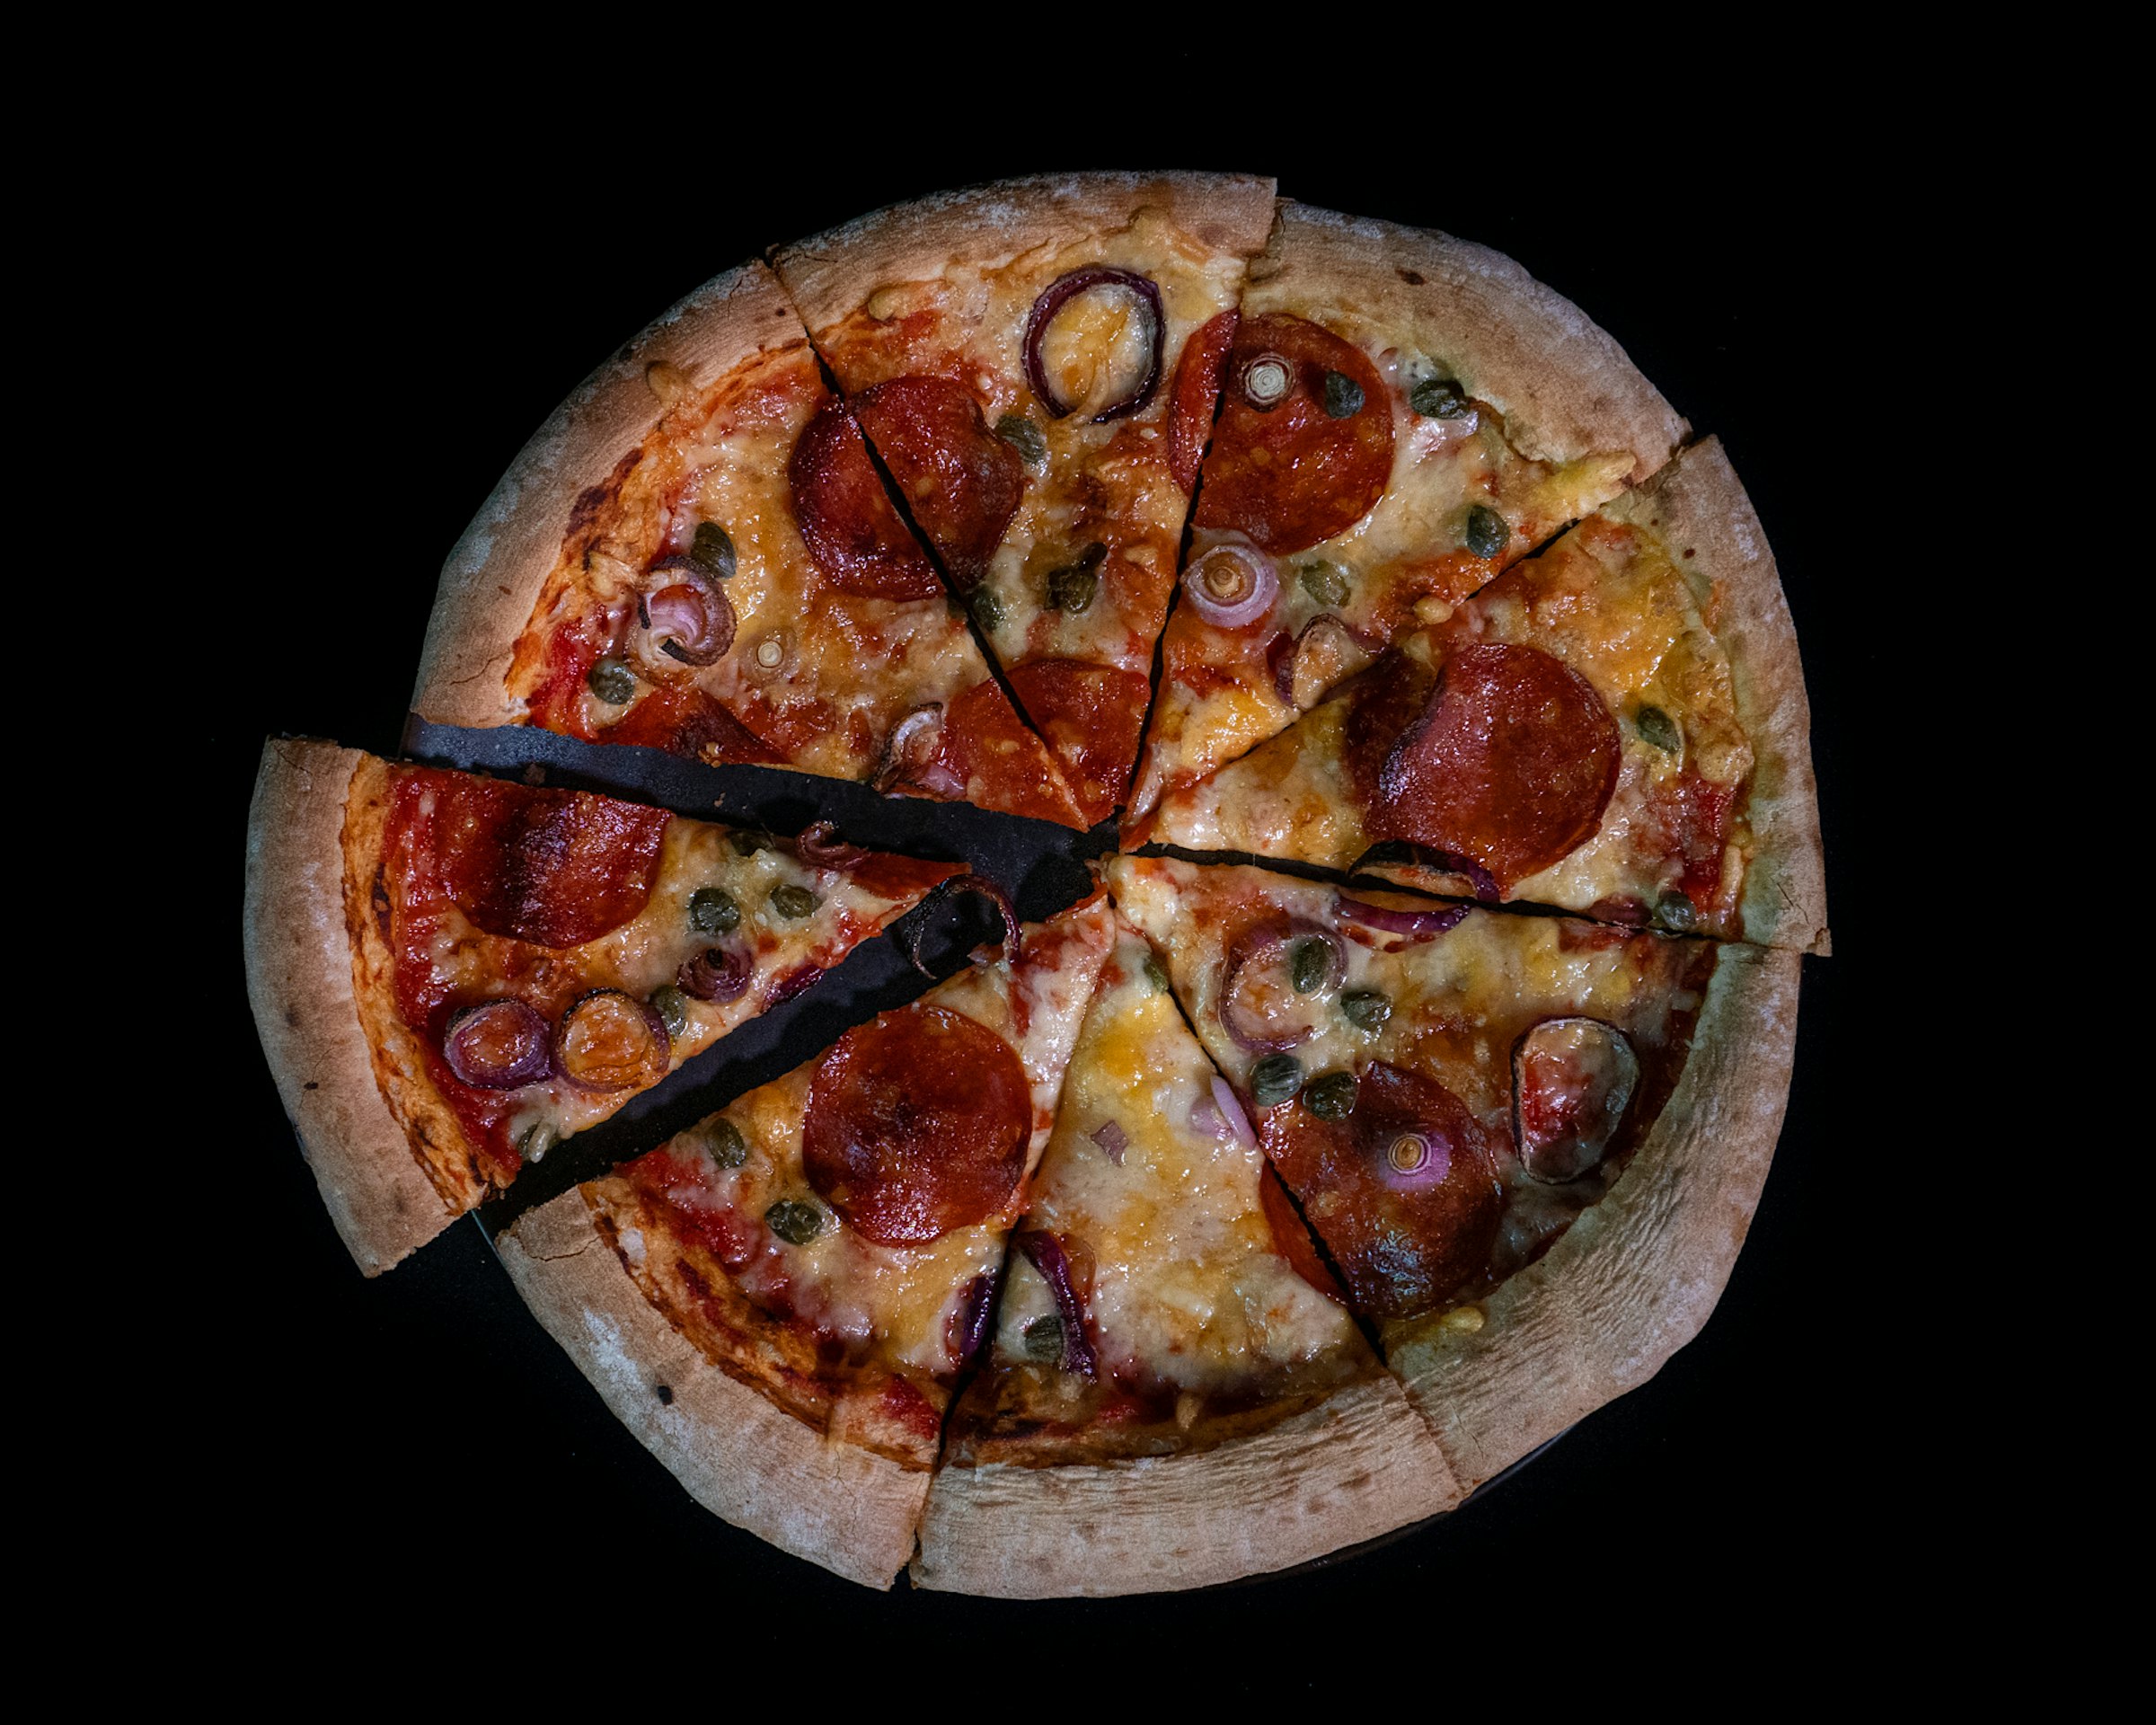 Pizza with chorizo on top. Photo